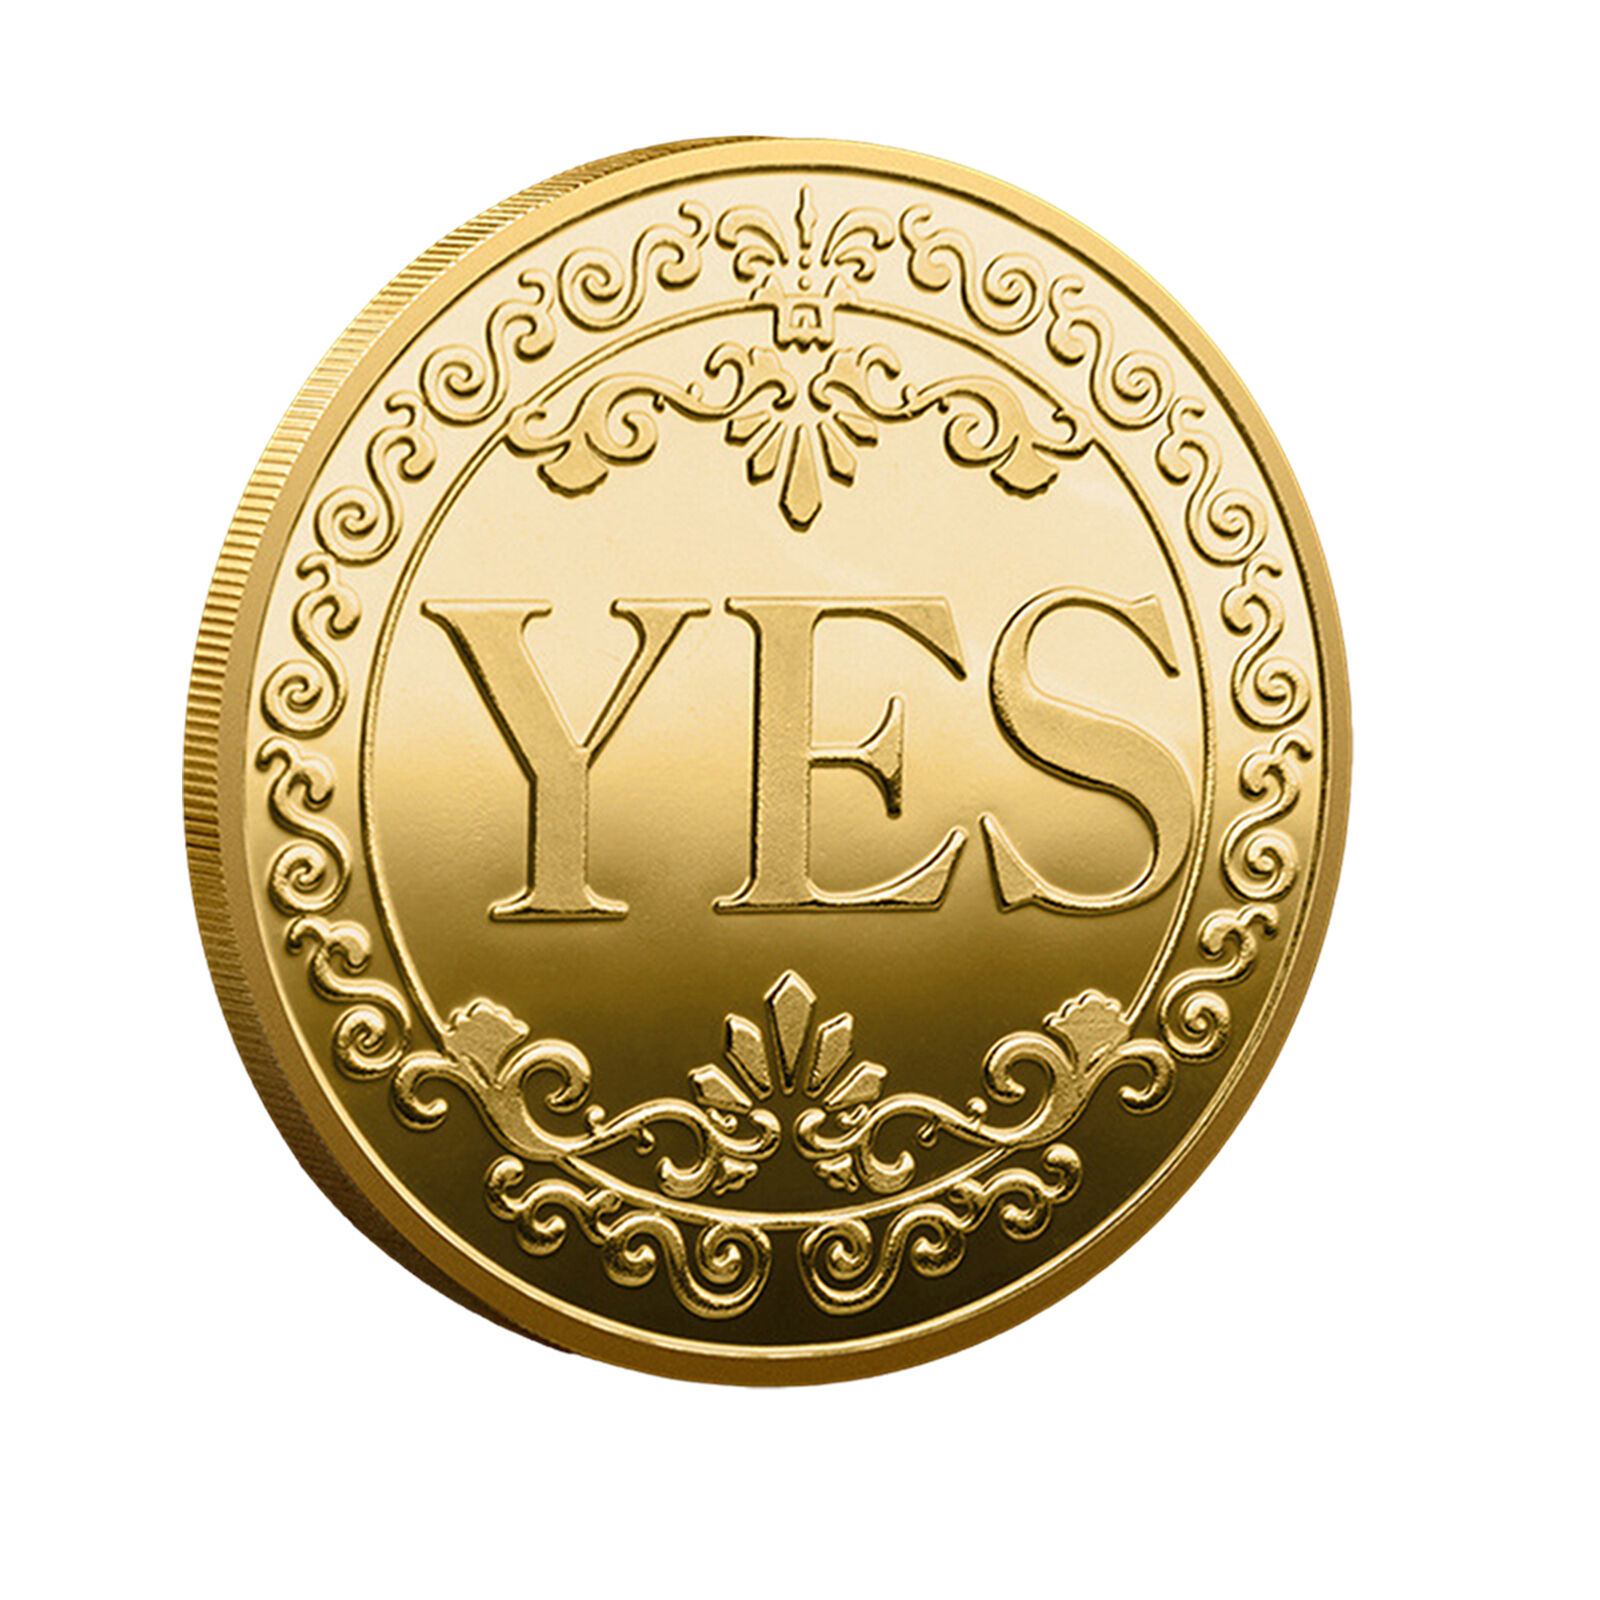 1pc Yes/No Coin Metal Prediction Decision Coin Decision Maker Lucky Coin